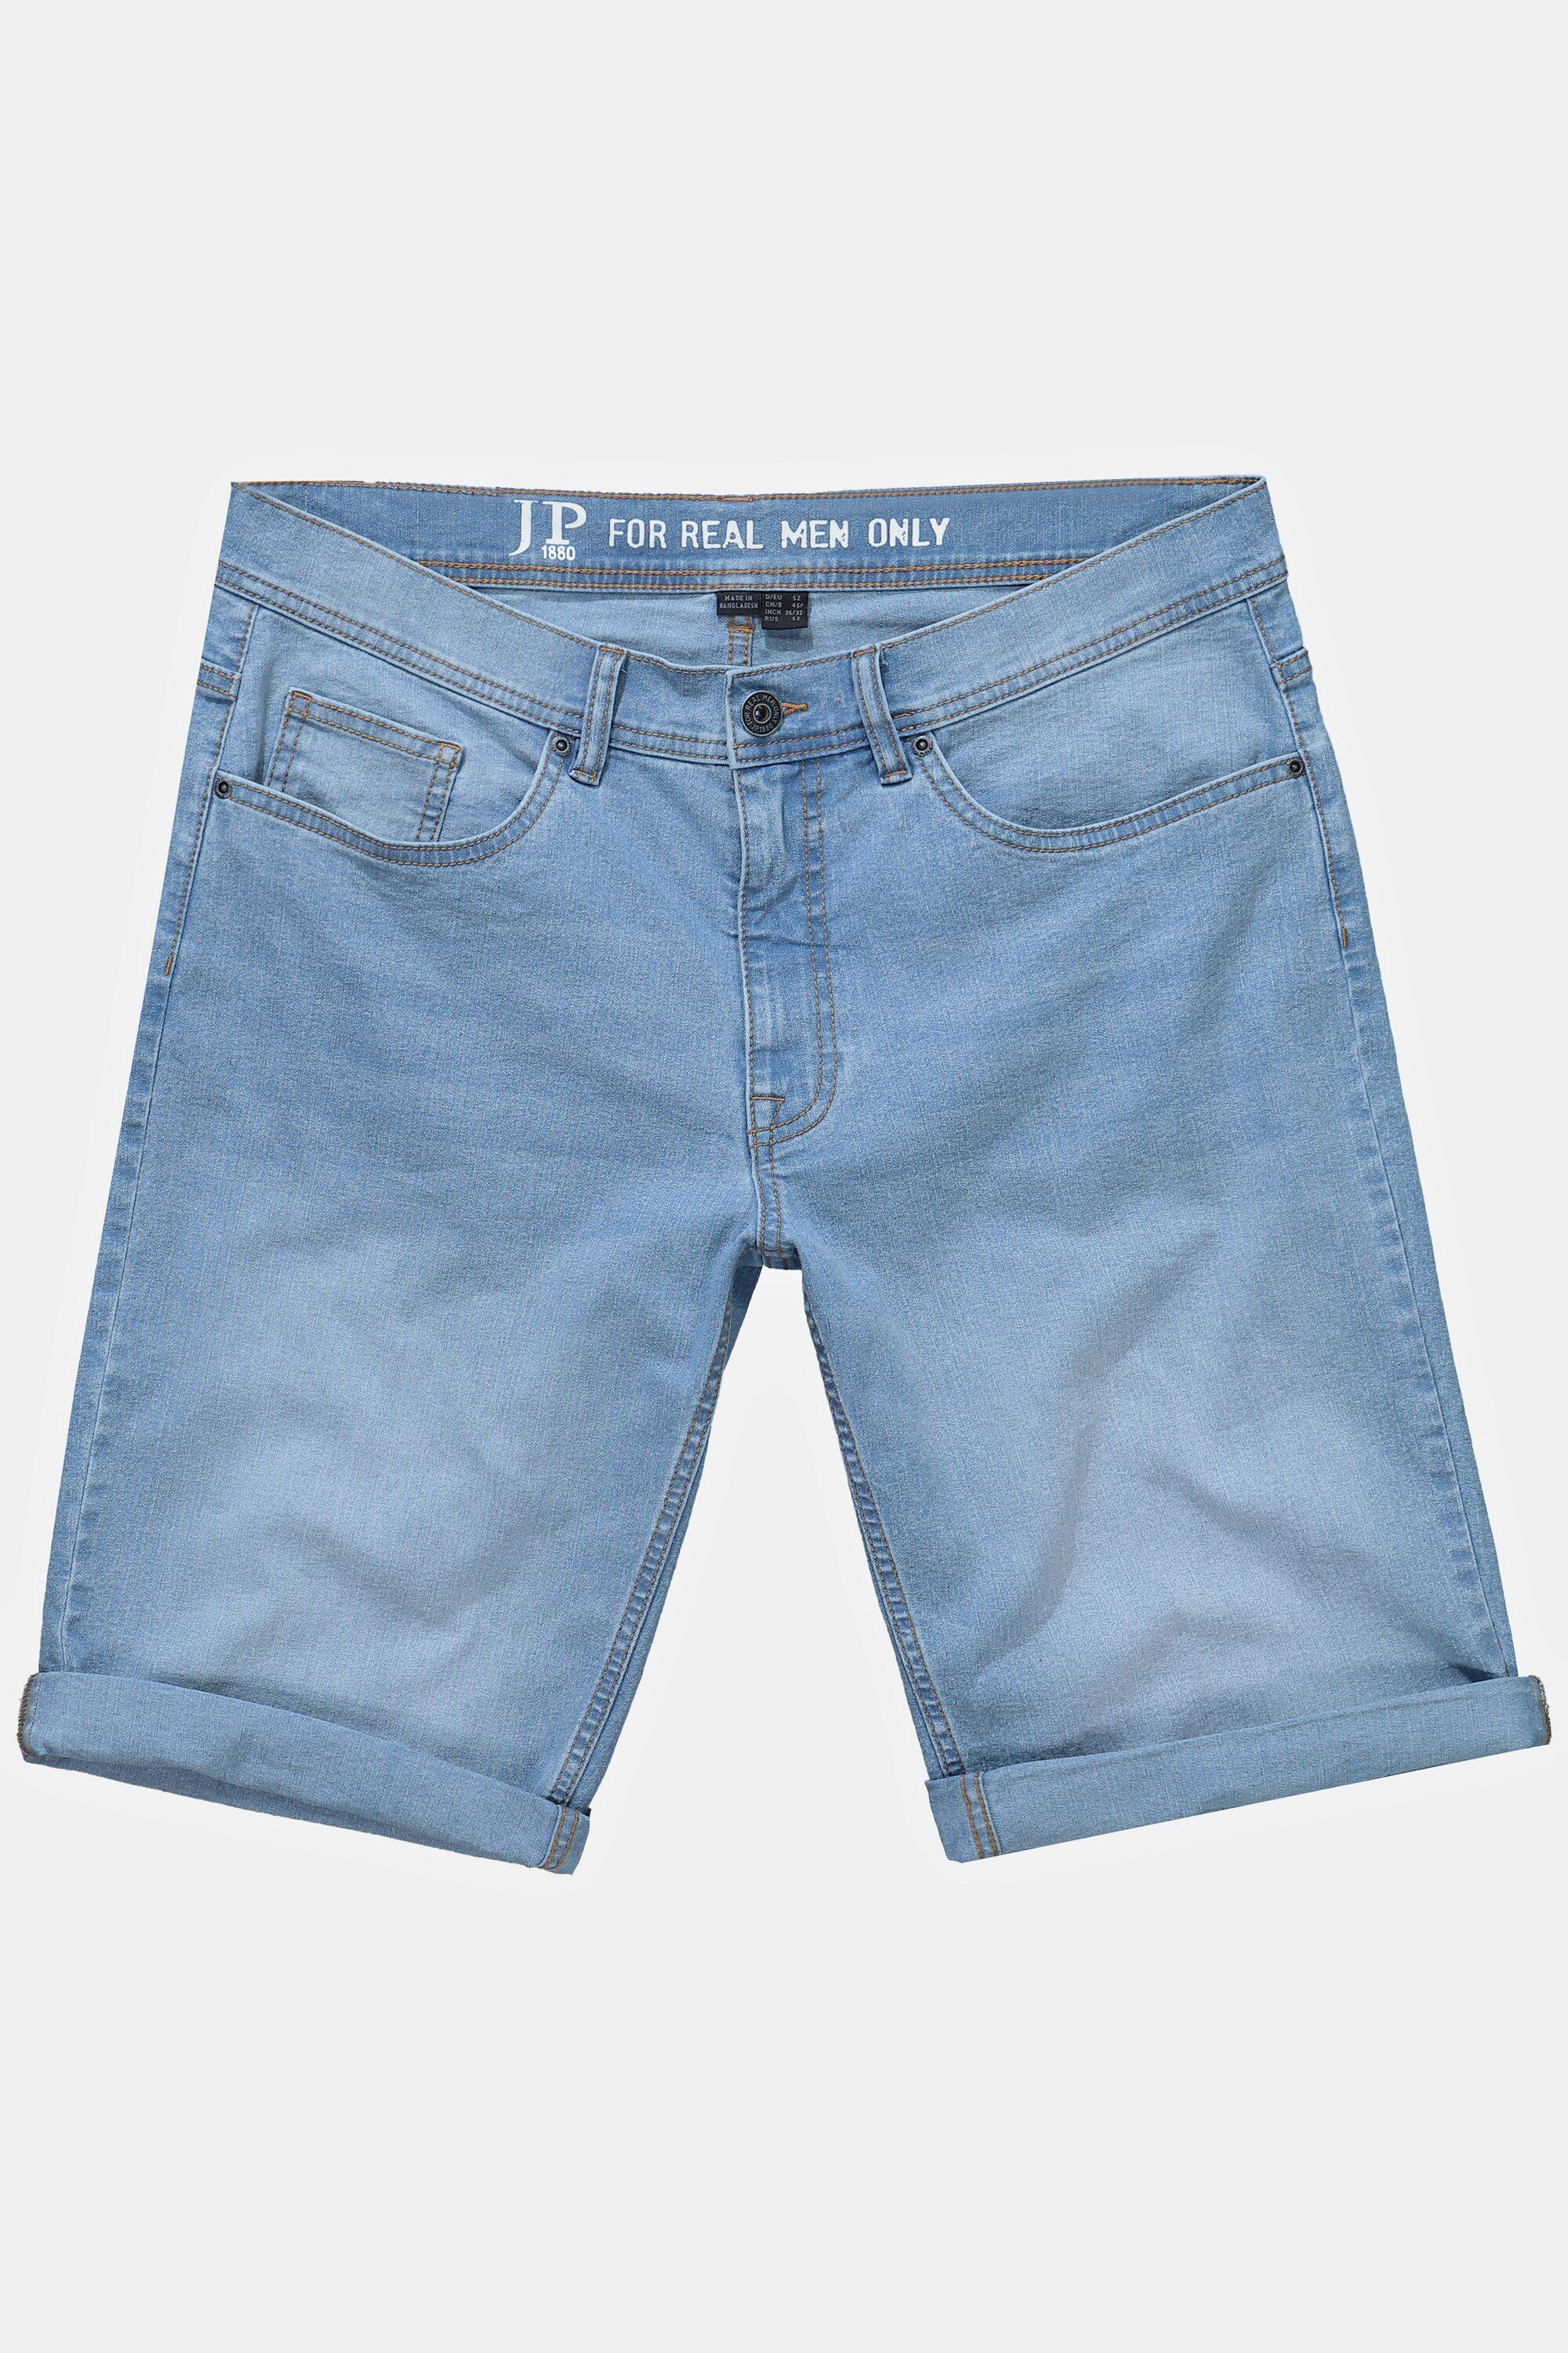 Regular Denim Bermuda denim JP1880 Fit bleached Stretch Jeansbermudas 5-Pocket